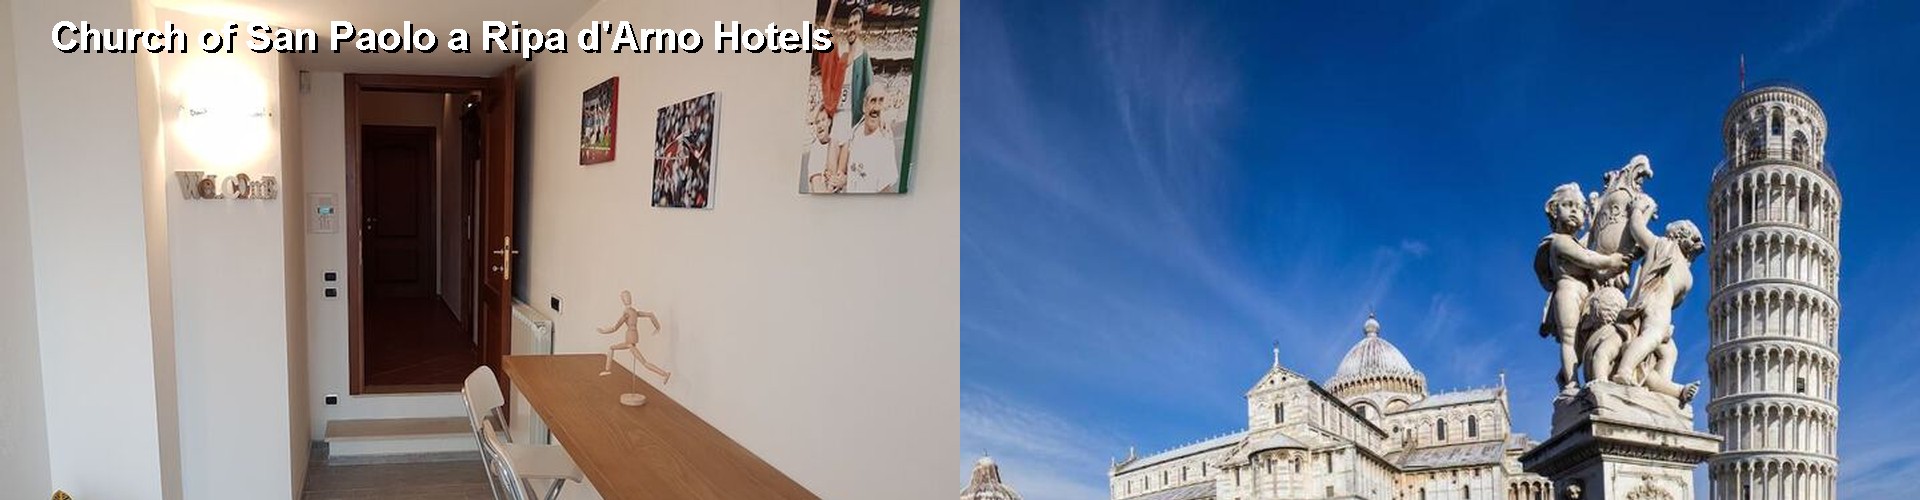 5 Best Hotels near Church of San Paolo a Ripa d'Arno